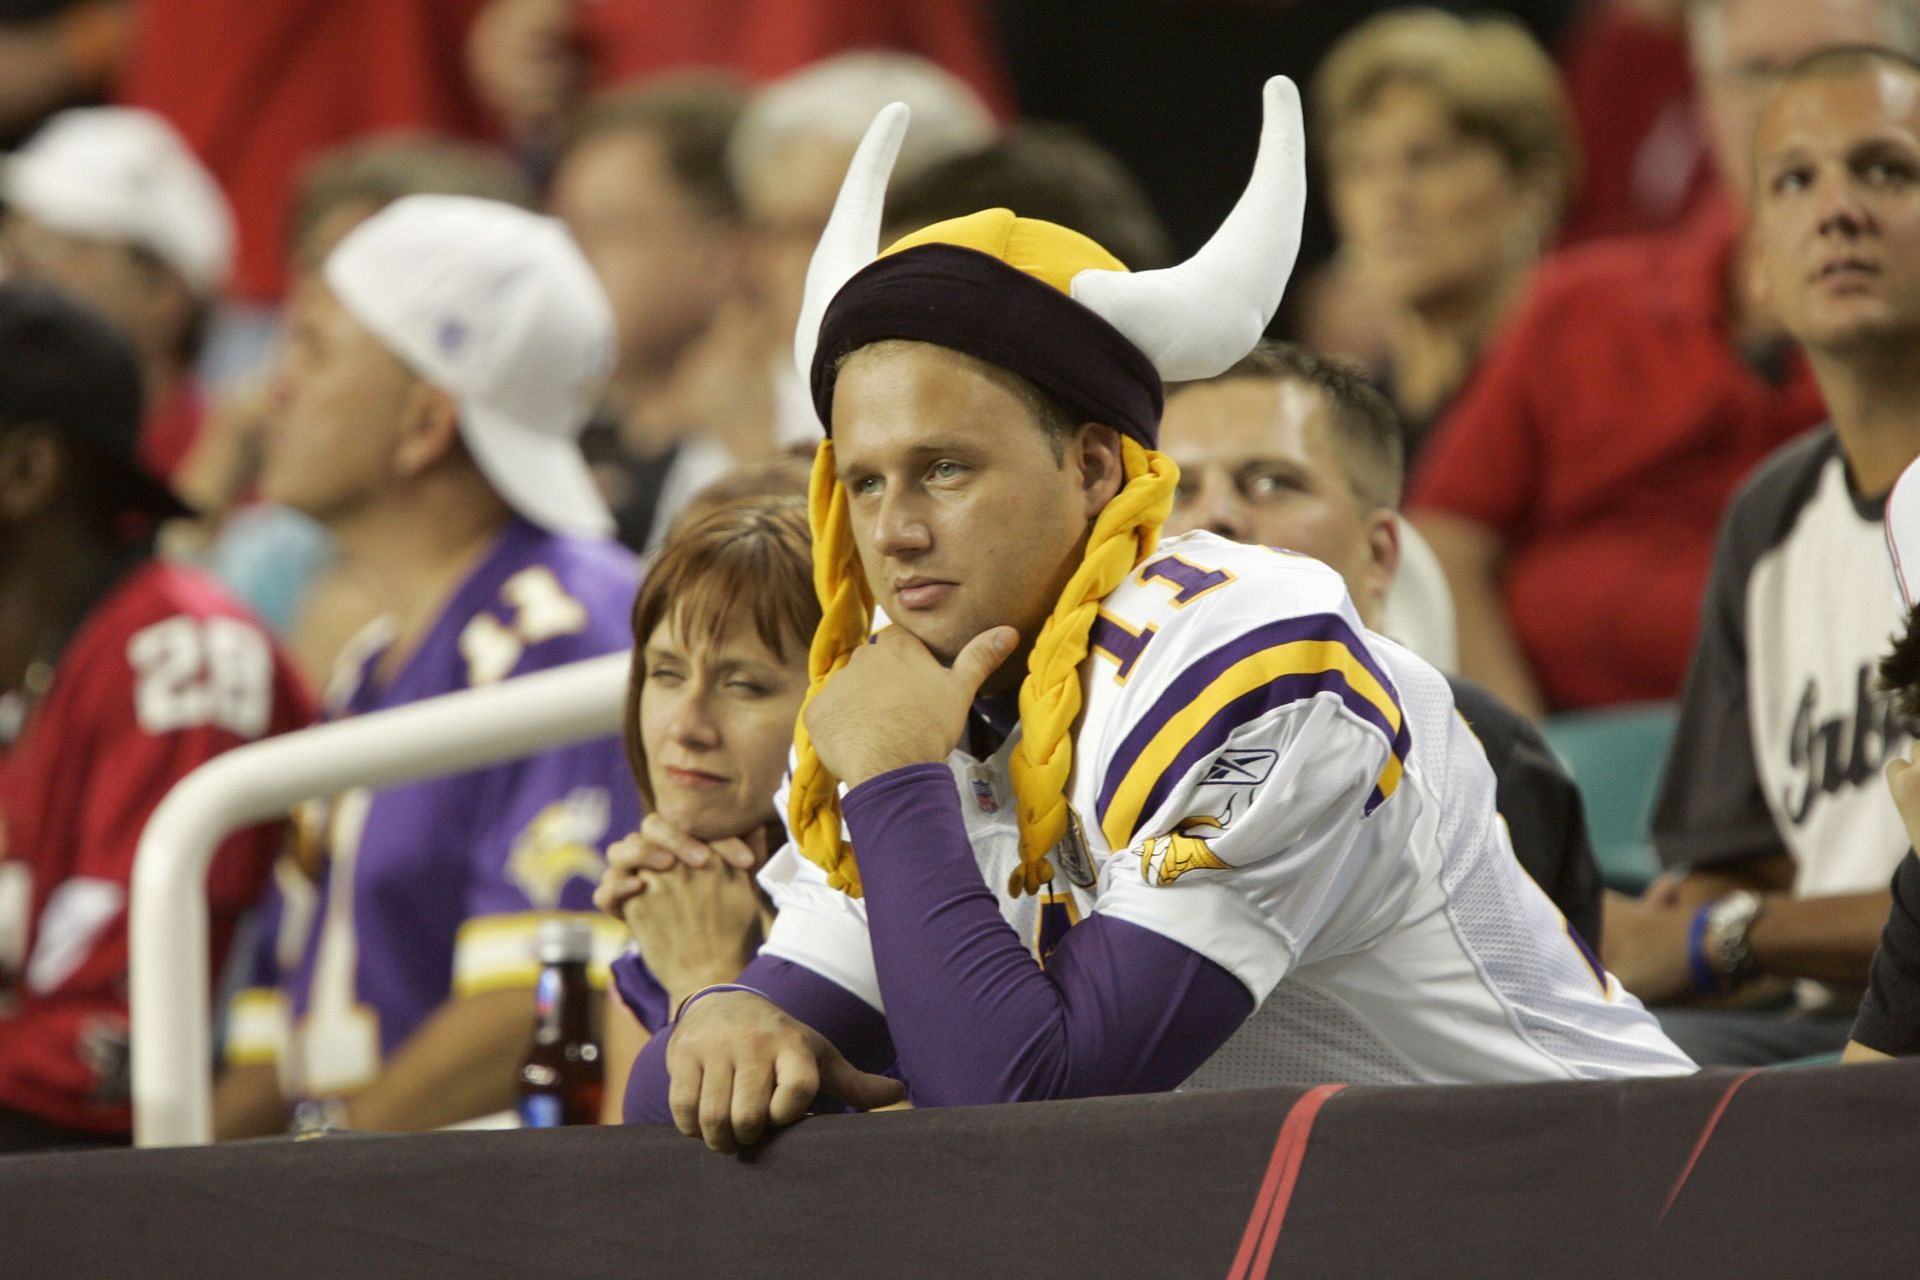 Upset fans of the Minnesota Vikings seen in 2005 (Photo: Getty)